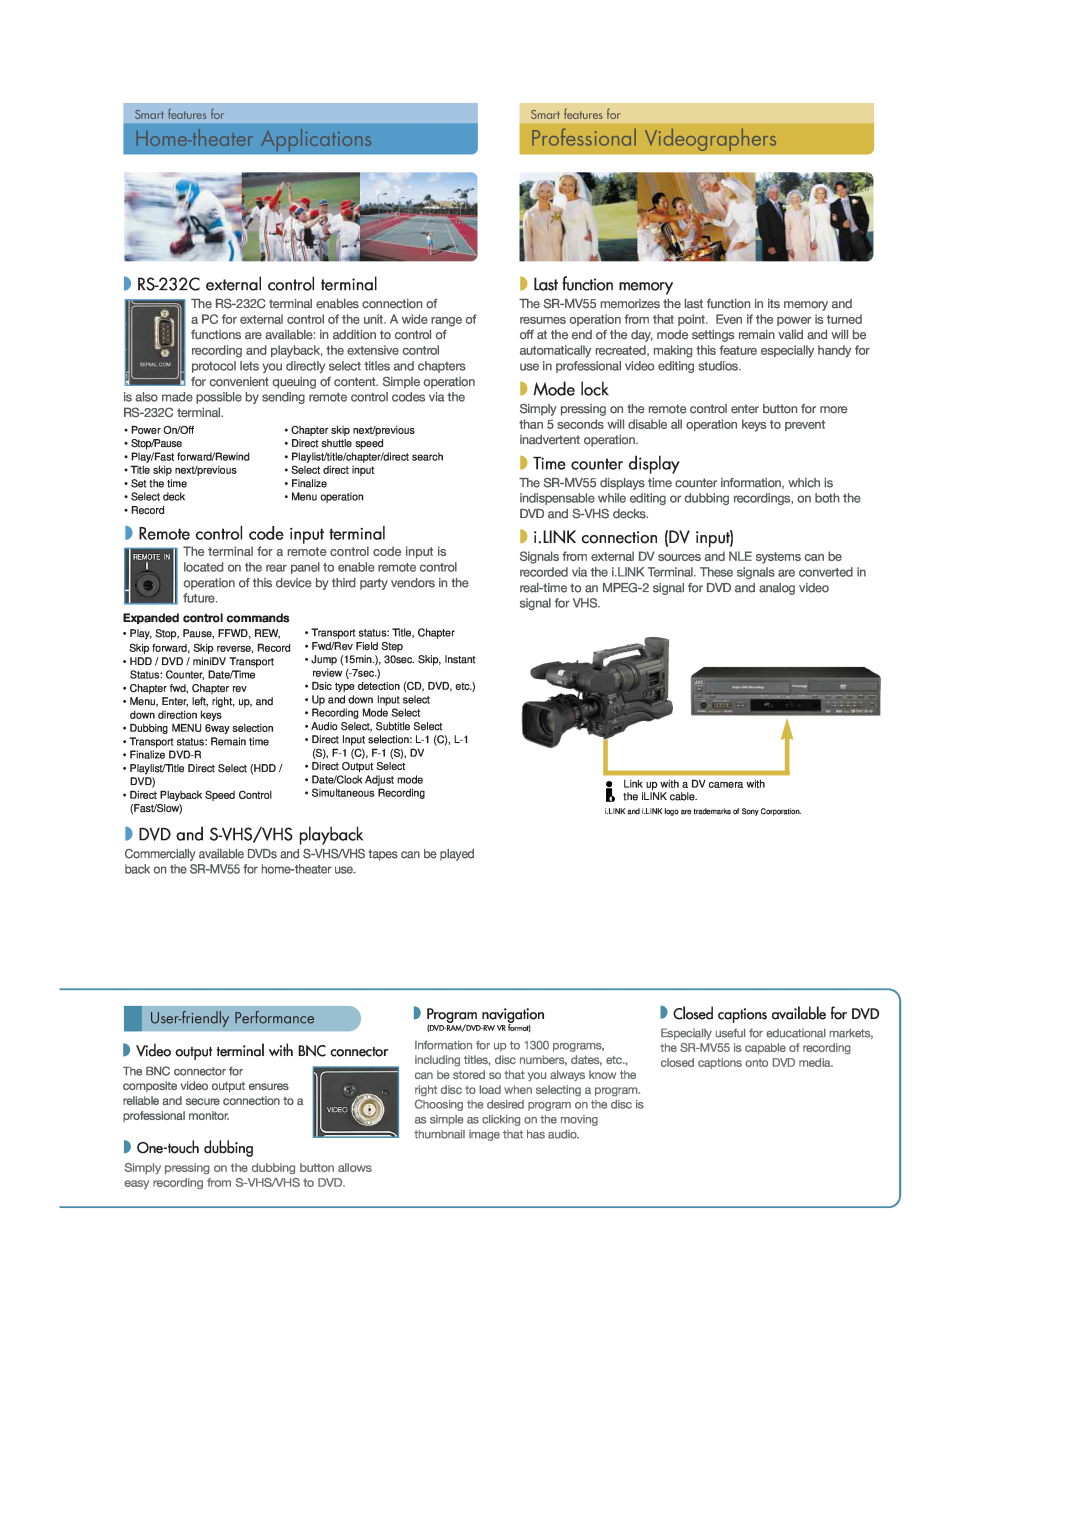 JVC SR-MV55 Home-theater Applications, Professional Videographers, RS-232C external control terminal, Last function memory 